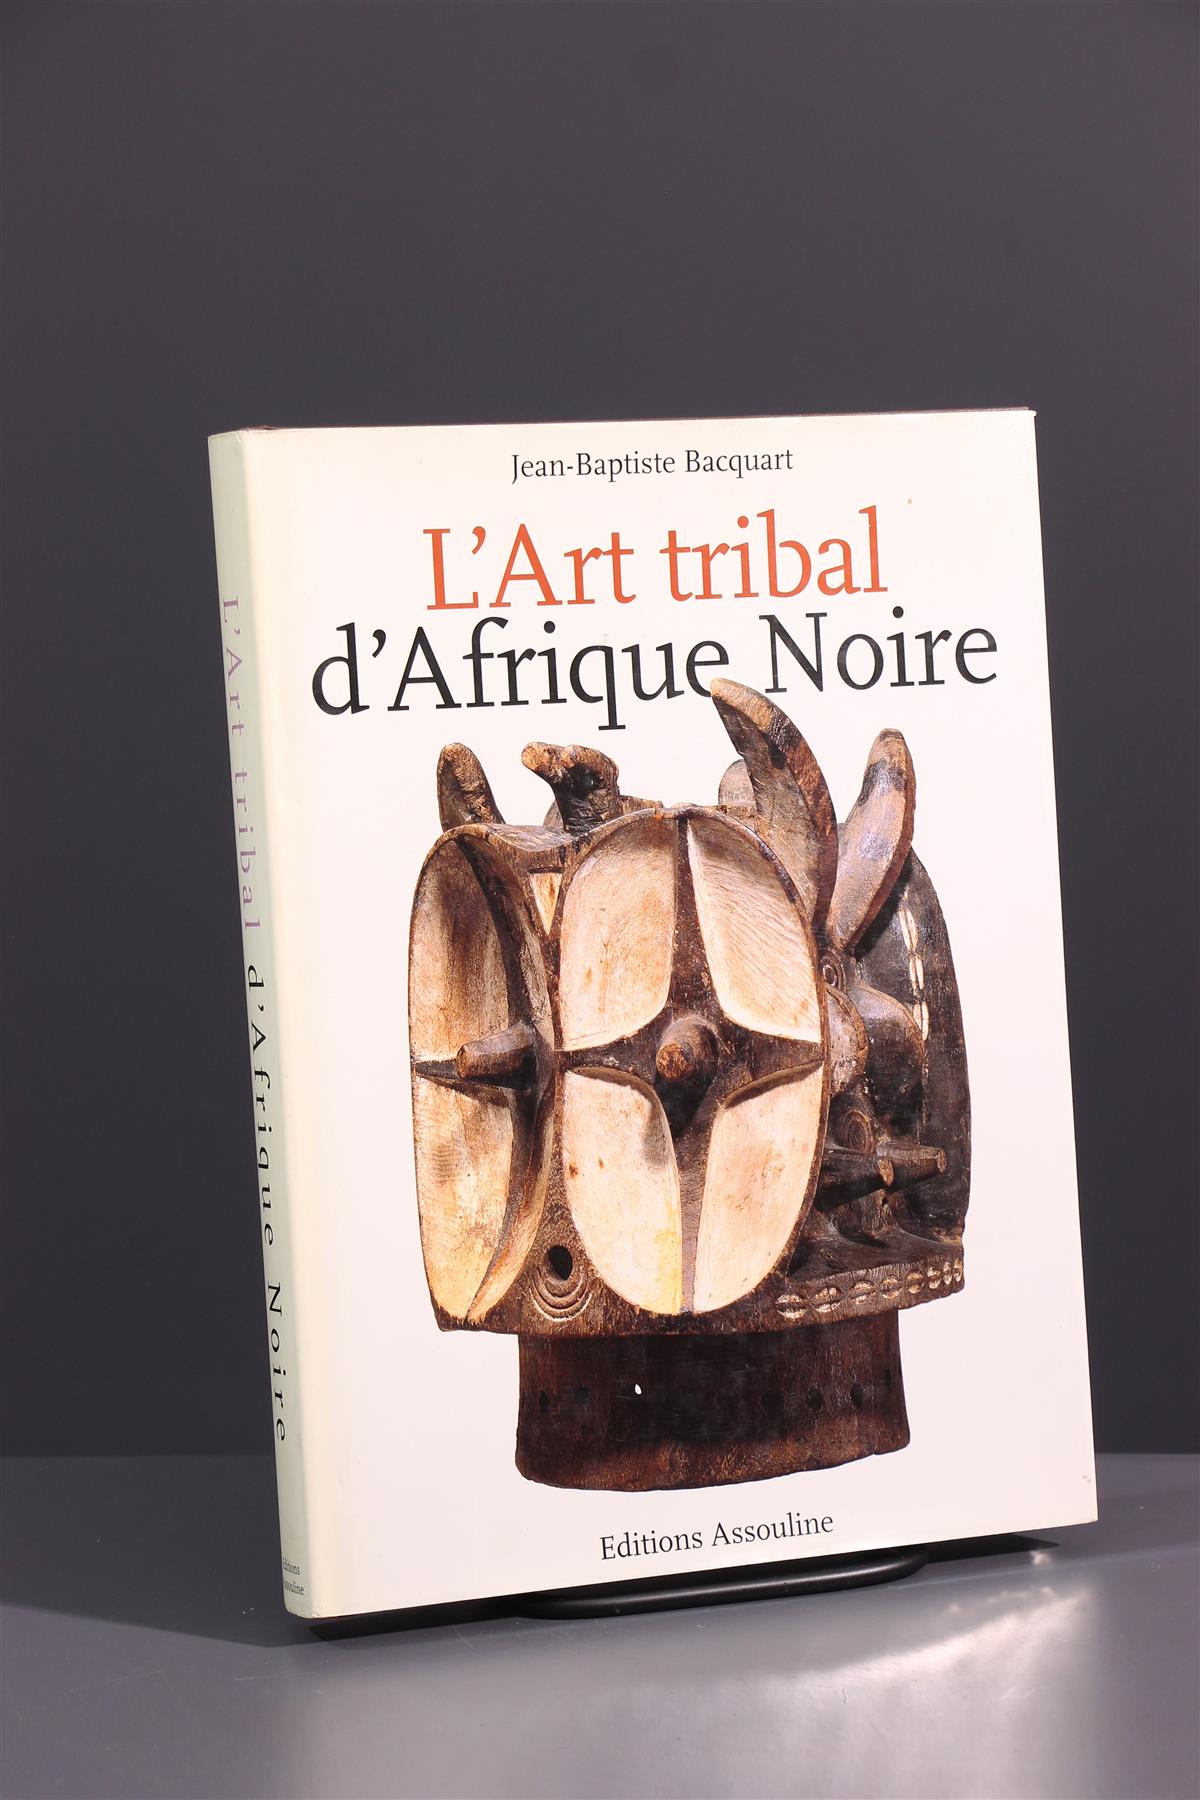  - Arte tribal africano